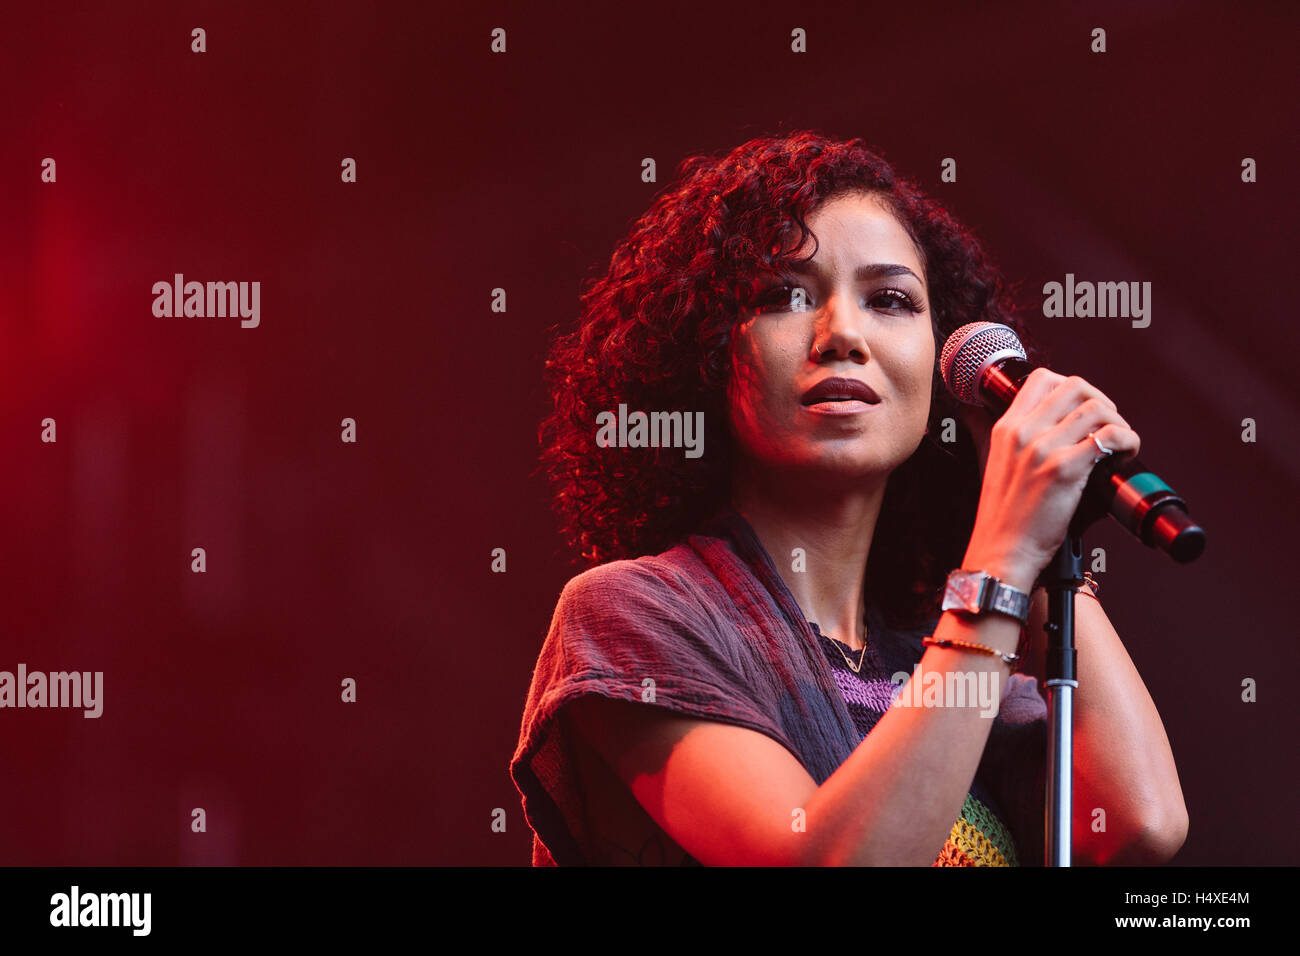 Singer Jhene Aiko performs at Bumbershoot Festival on September 5, 2015 in Seattle, Washington. Stock Photo